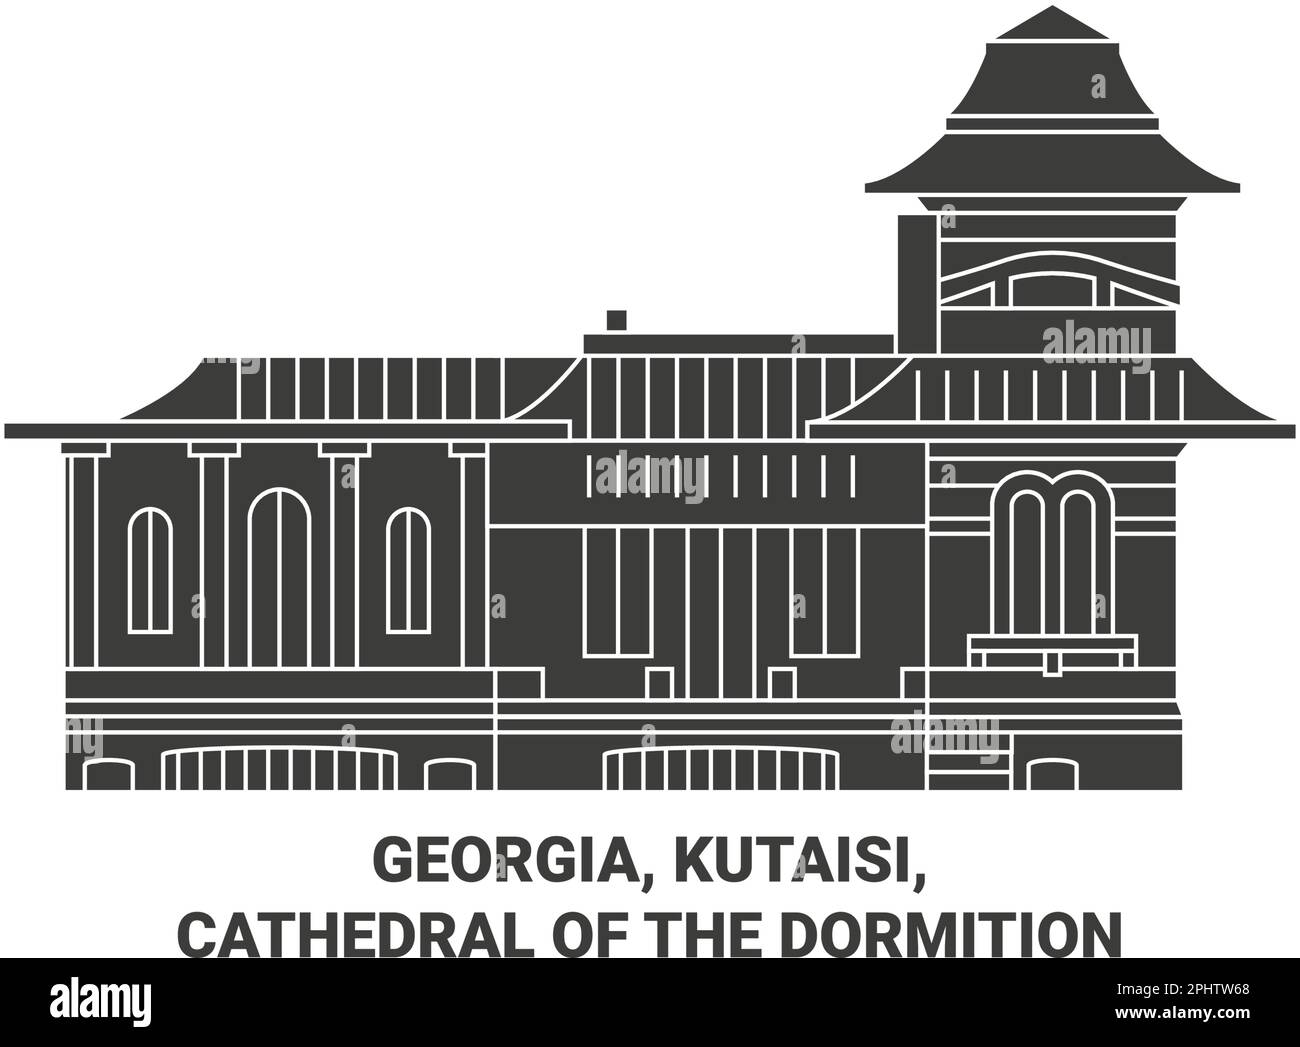 Georgia, Kutaisi, Cathedral Of The Dormition travel landmark vector illustration Stock Vector